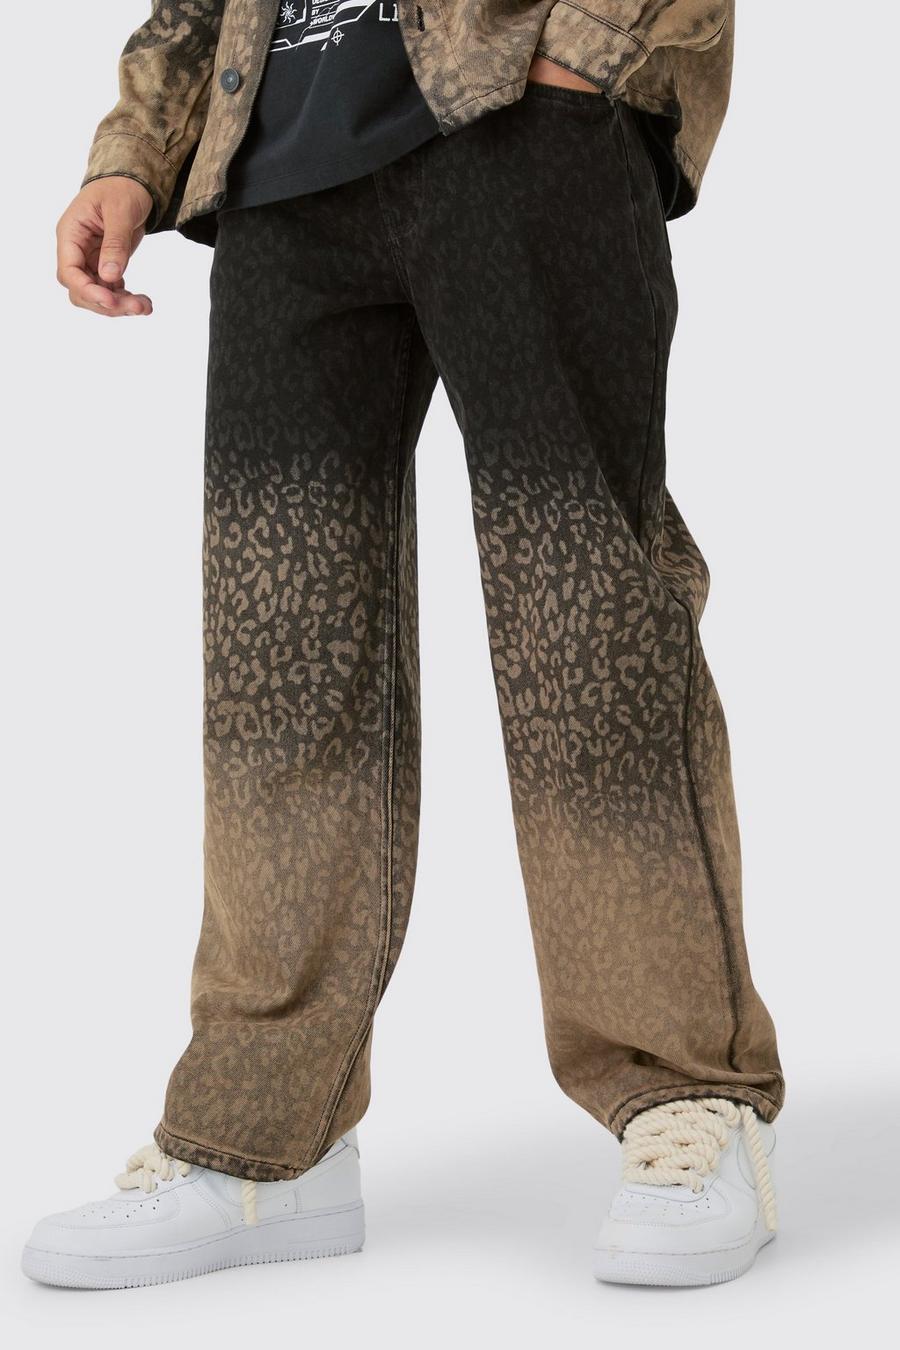 Jeans extra comodi in denim rigido con stampa leopardata in tinta nera, Black